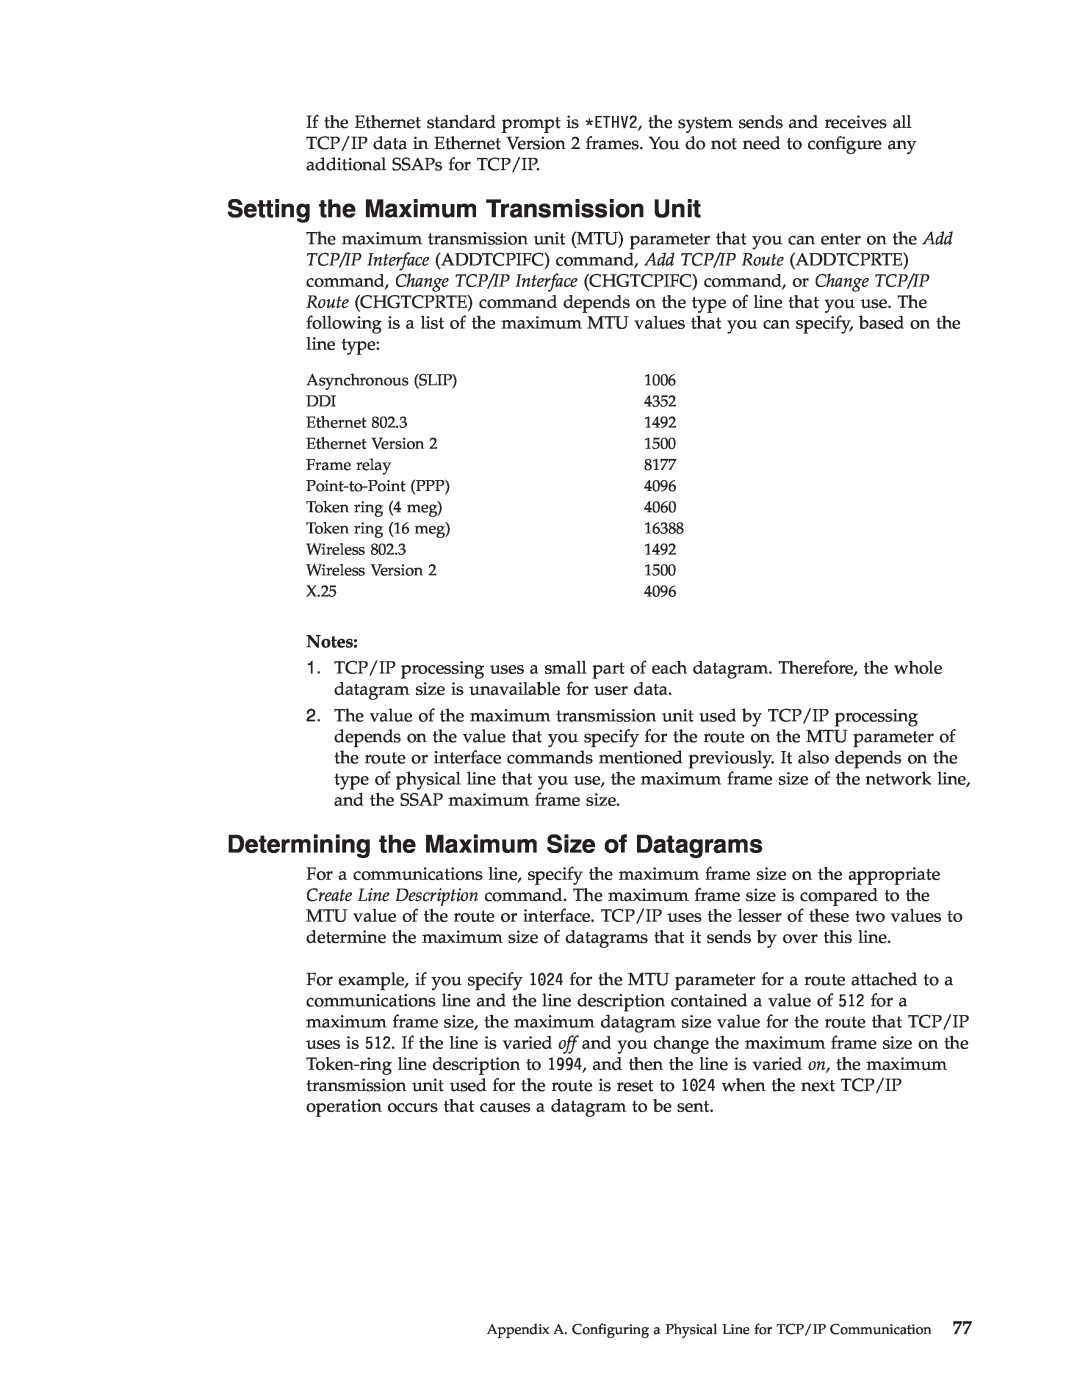 IBM SC41-5420-04 manual Setting the Maximum Transmission Unit, Determining the Maximum Size of Datagrams, Notes 